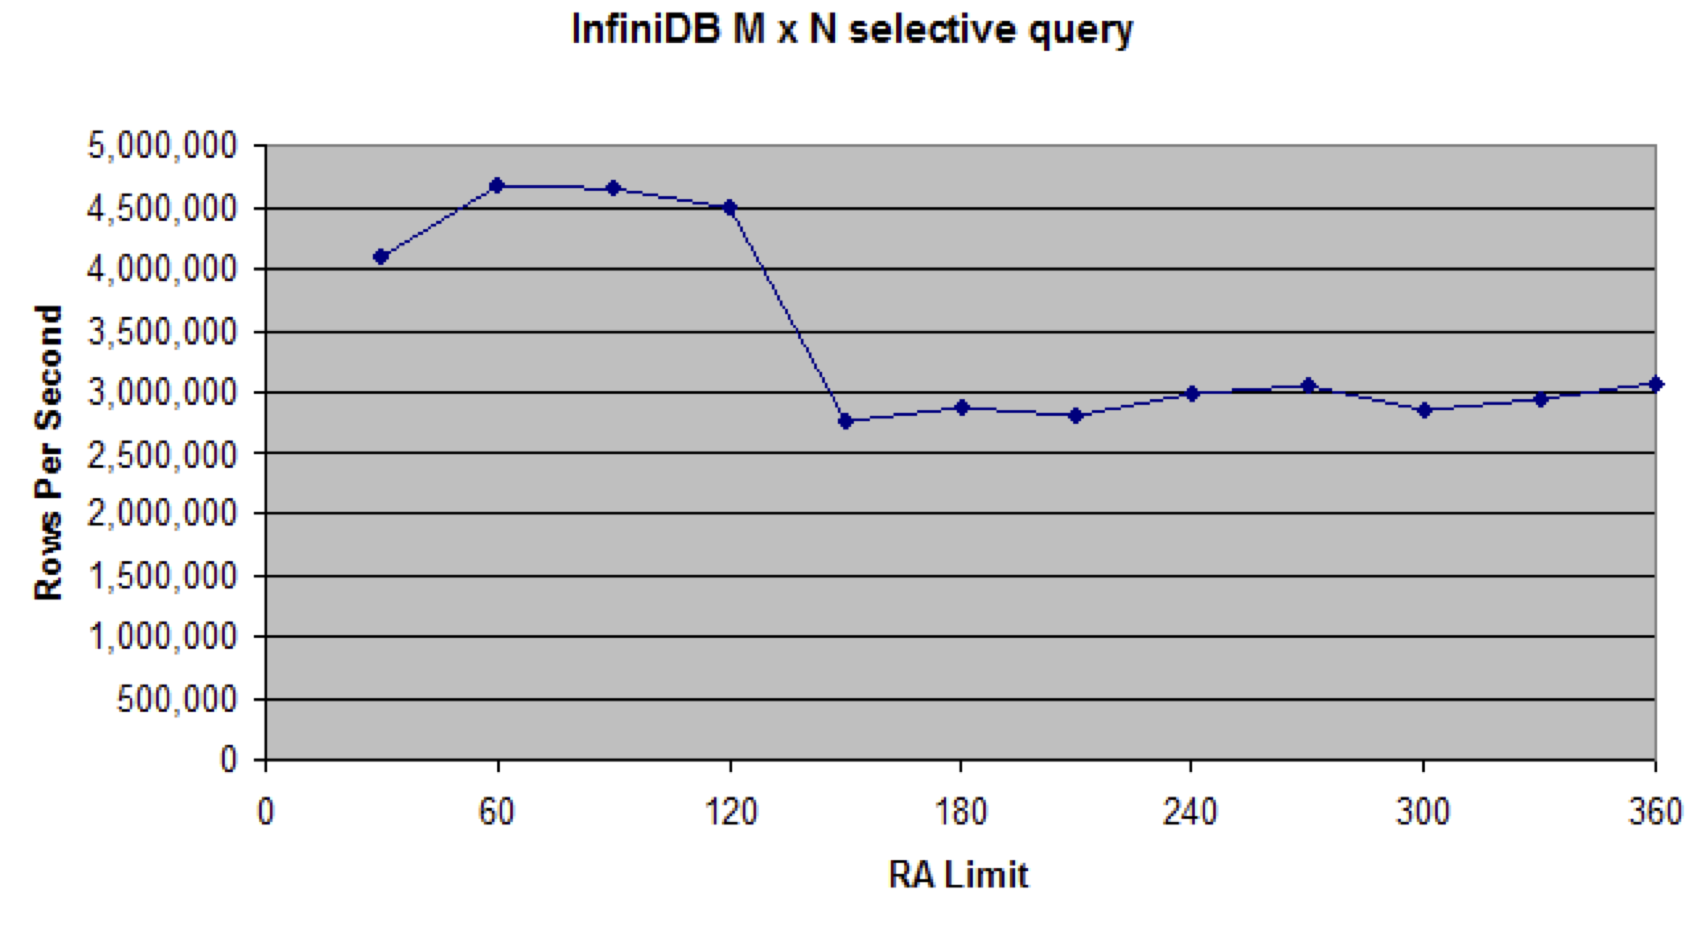 InfiniDB M x N selective query.